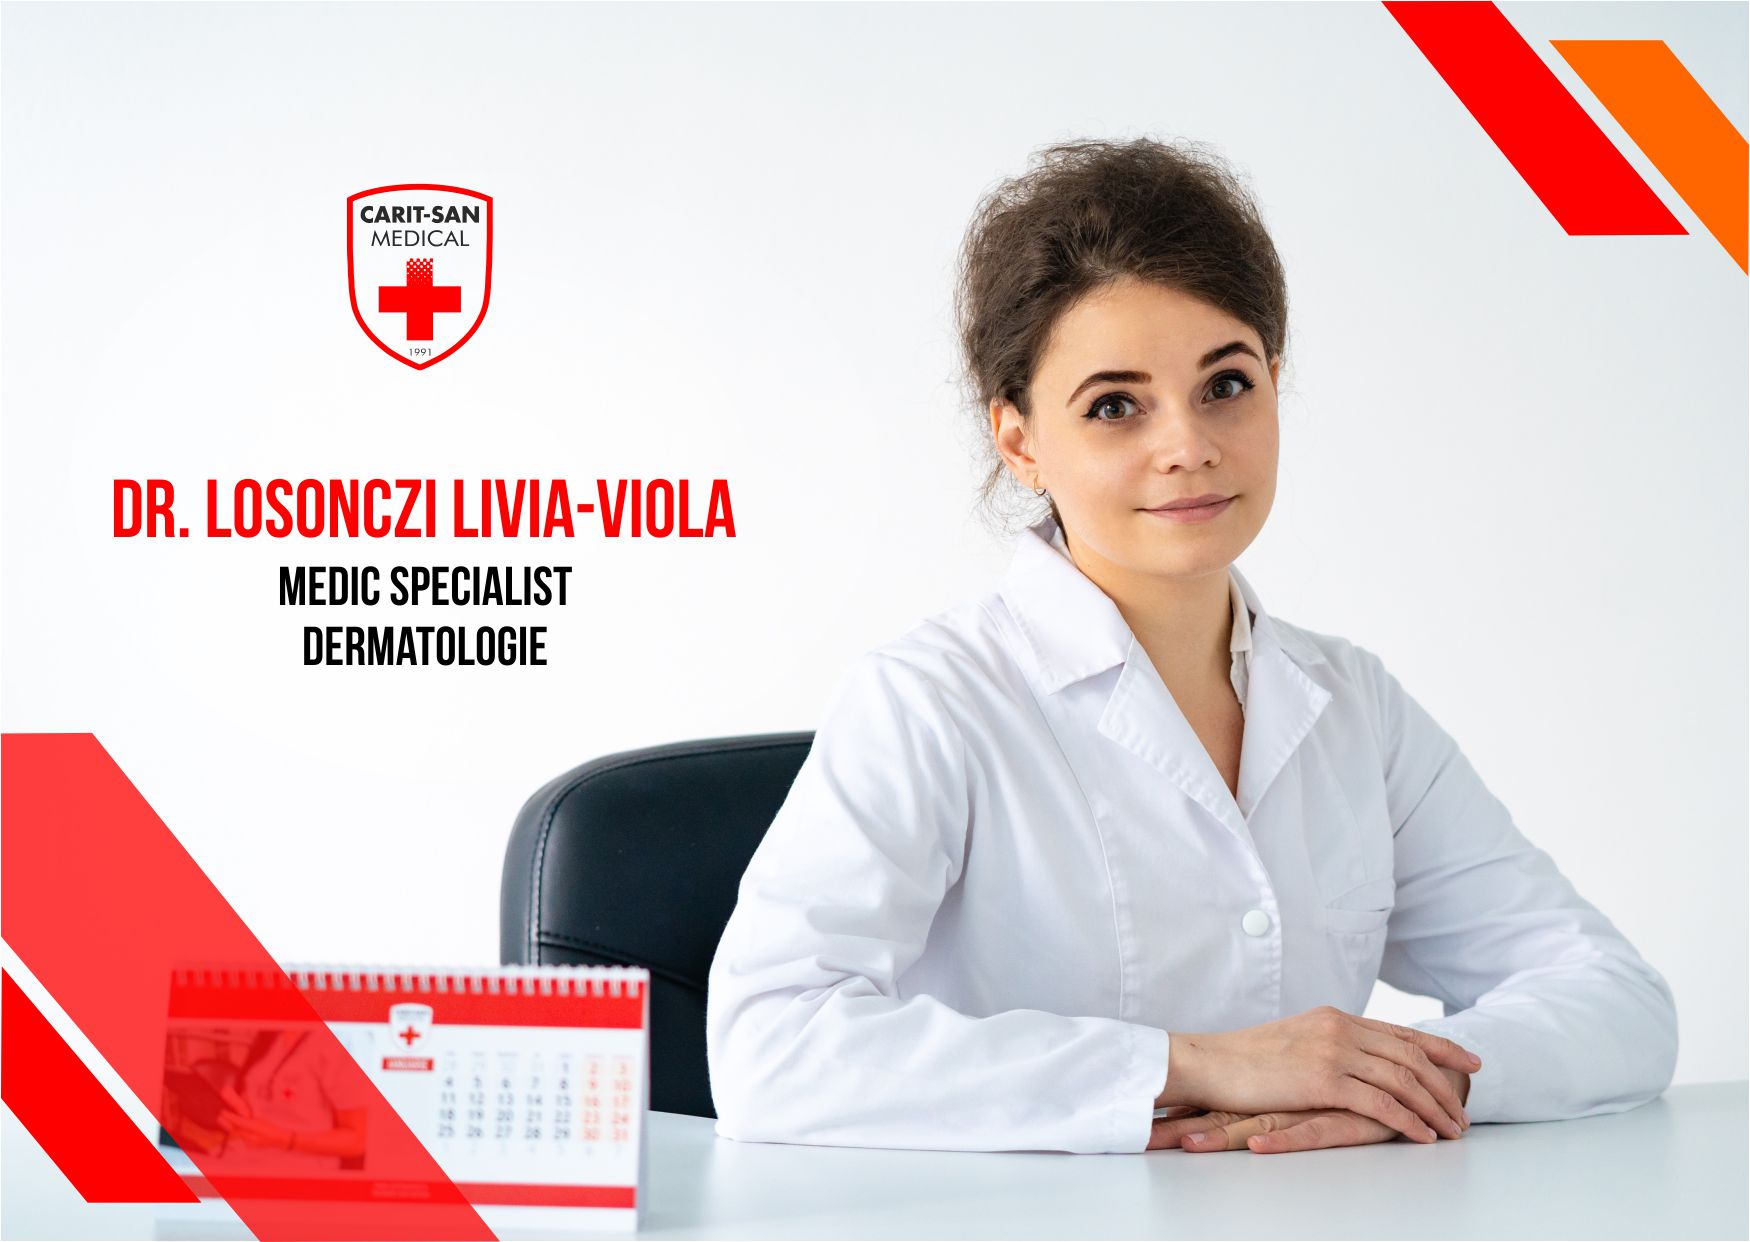 Dr. Losonczi Livia-Viola